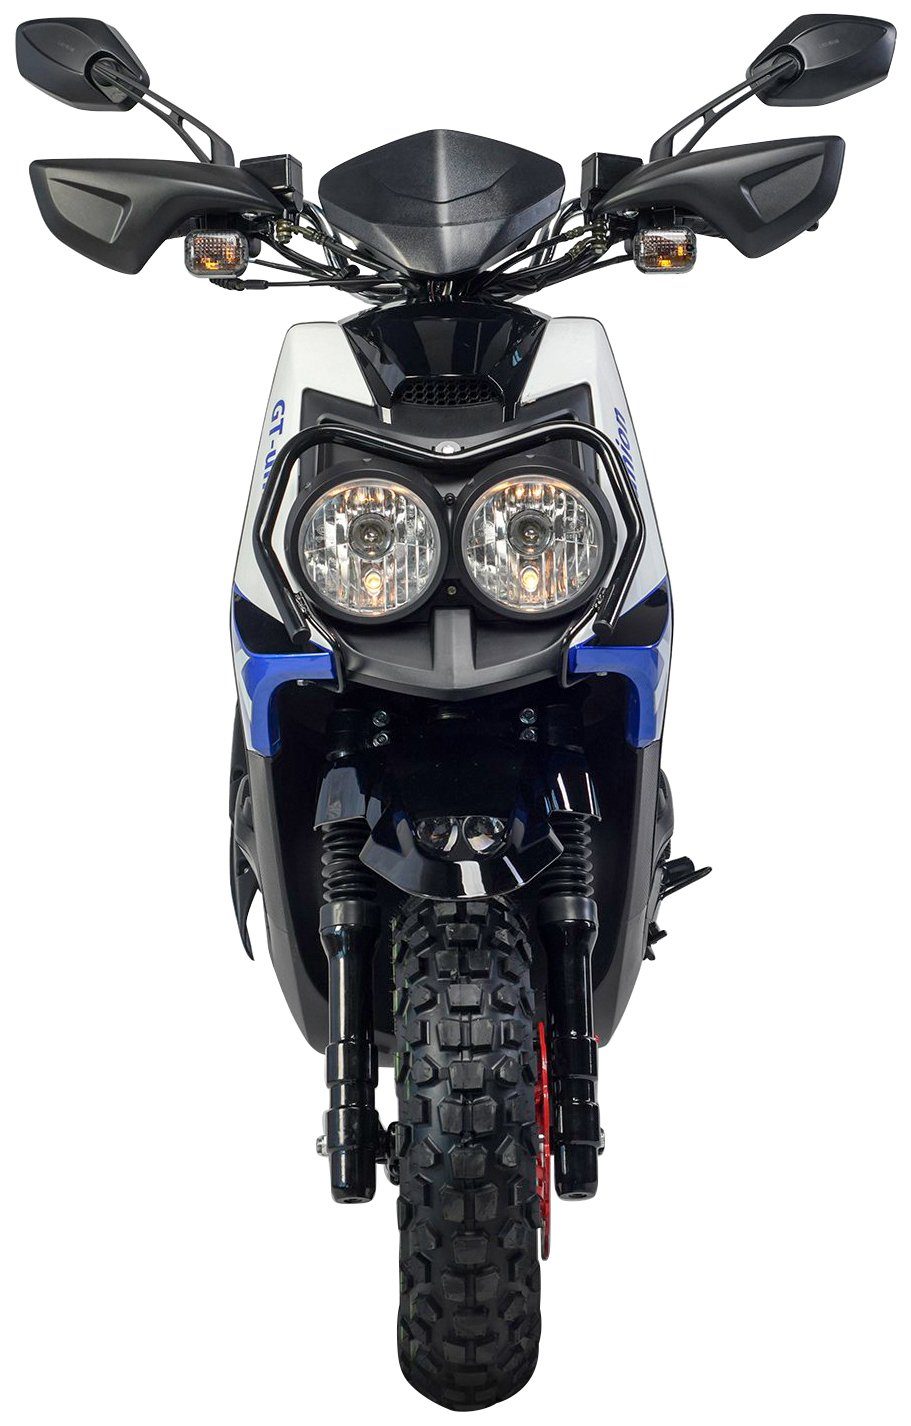 GT UNION Motorroller PX 55 km/h, Euro Cross-Concept, 125 85 5 ccm, weiß/blau/schwarz